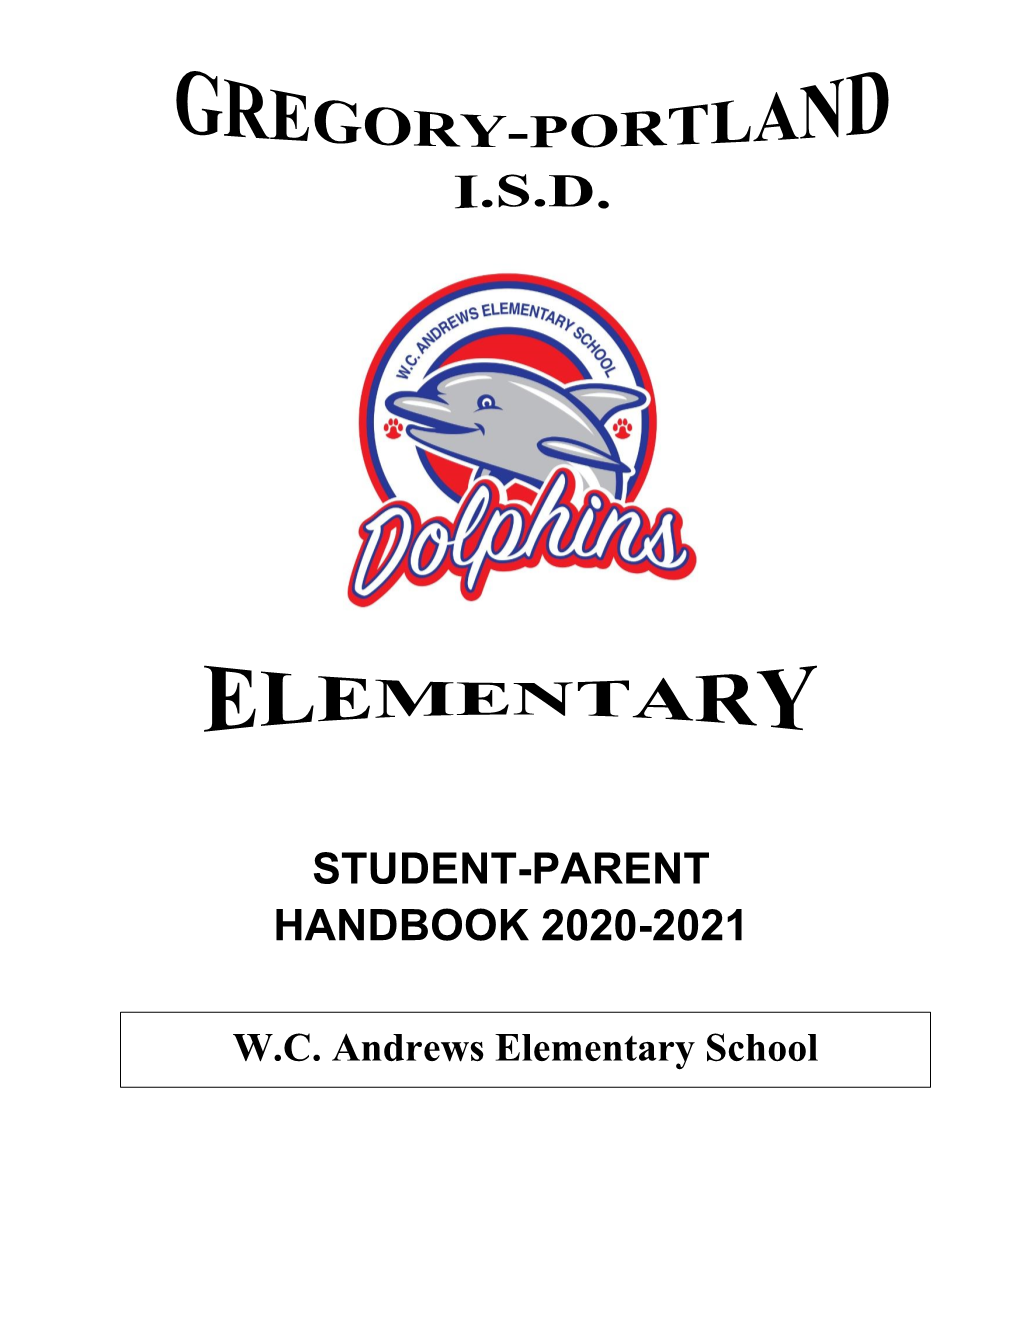 Student-Parent Handbook 2020-2021